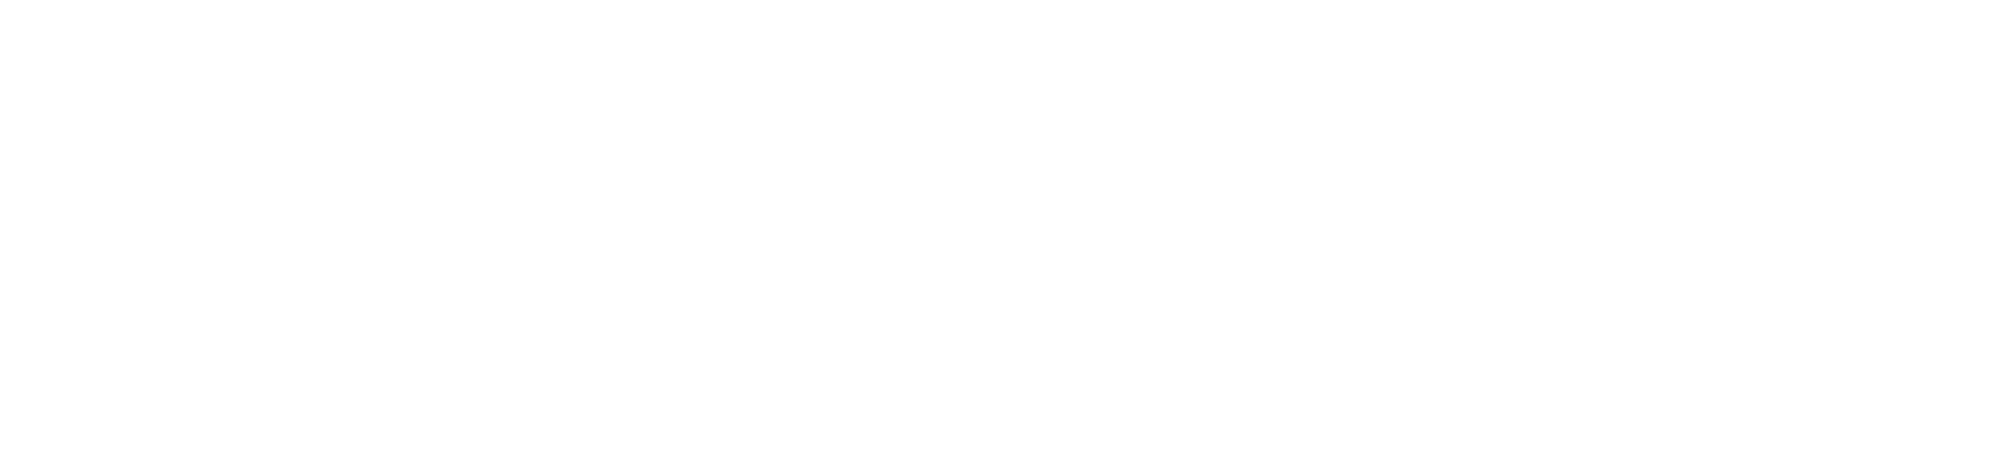 yamaha-logo-png-white